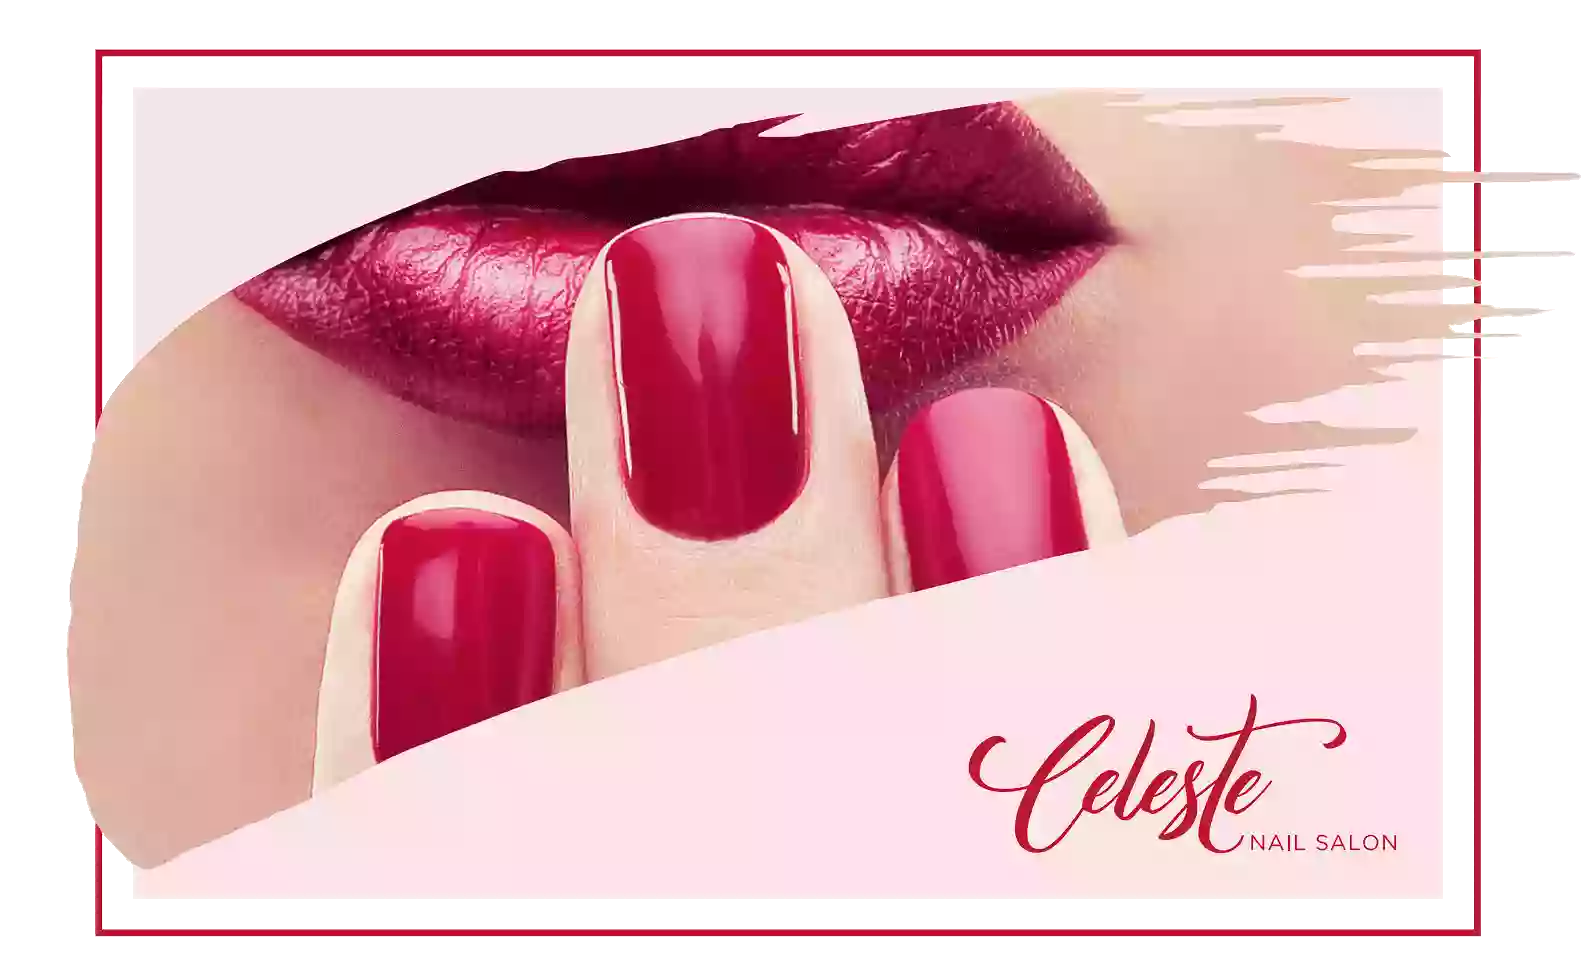 Celeste Nails